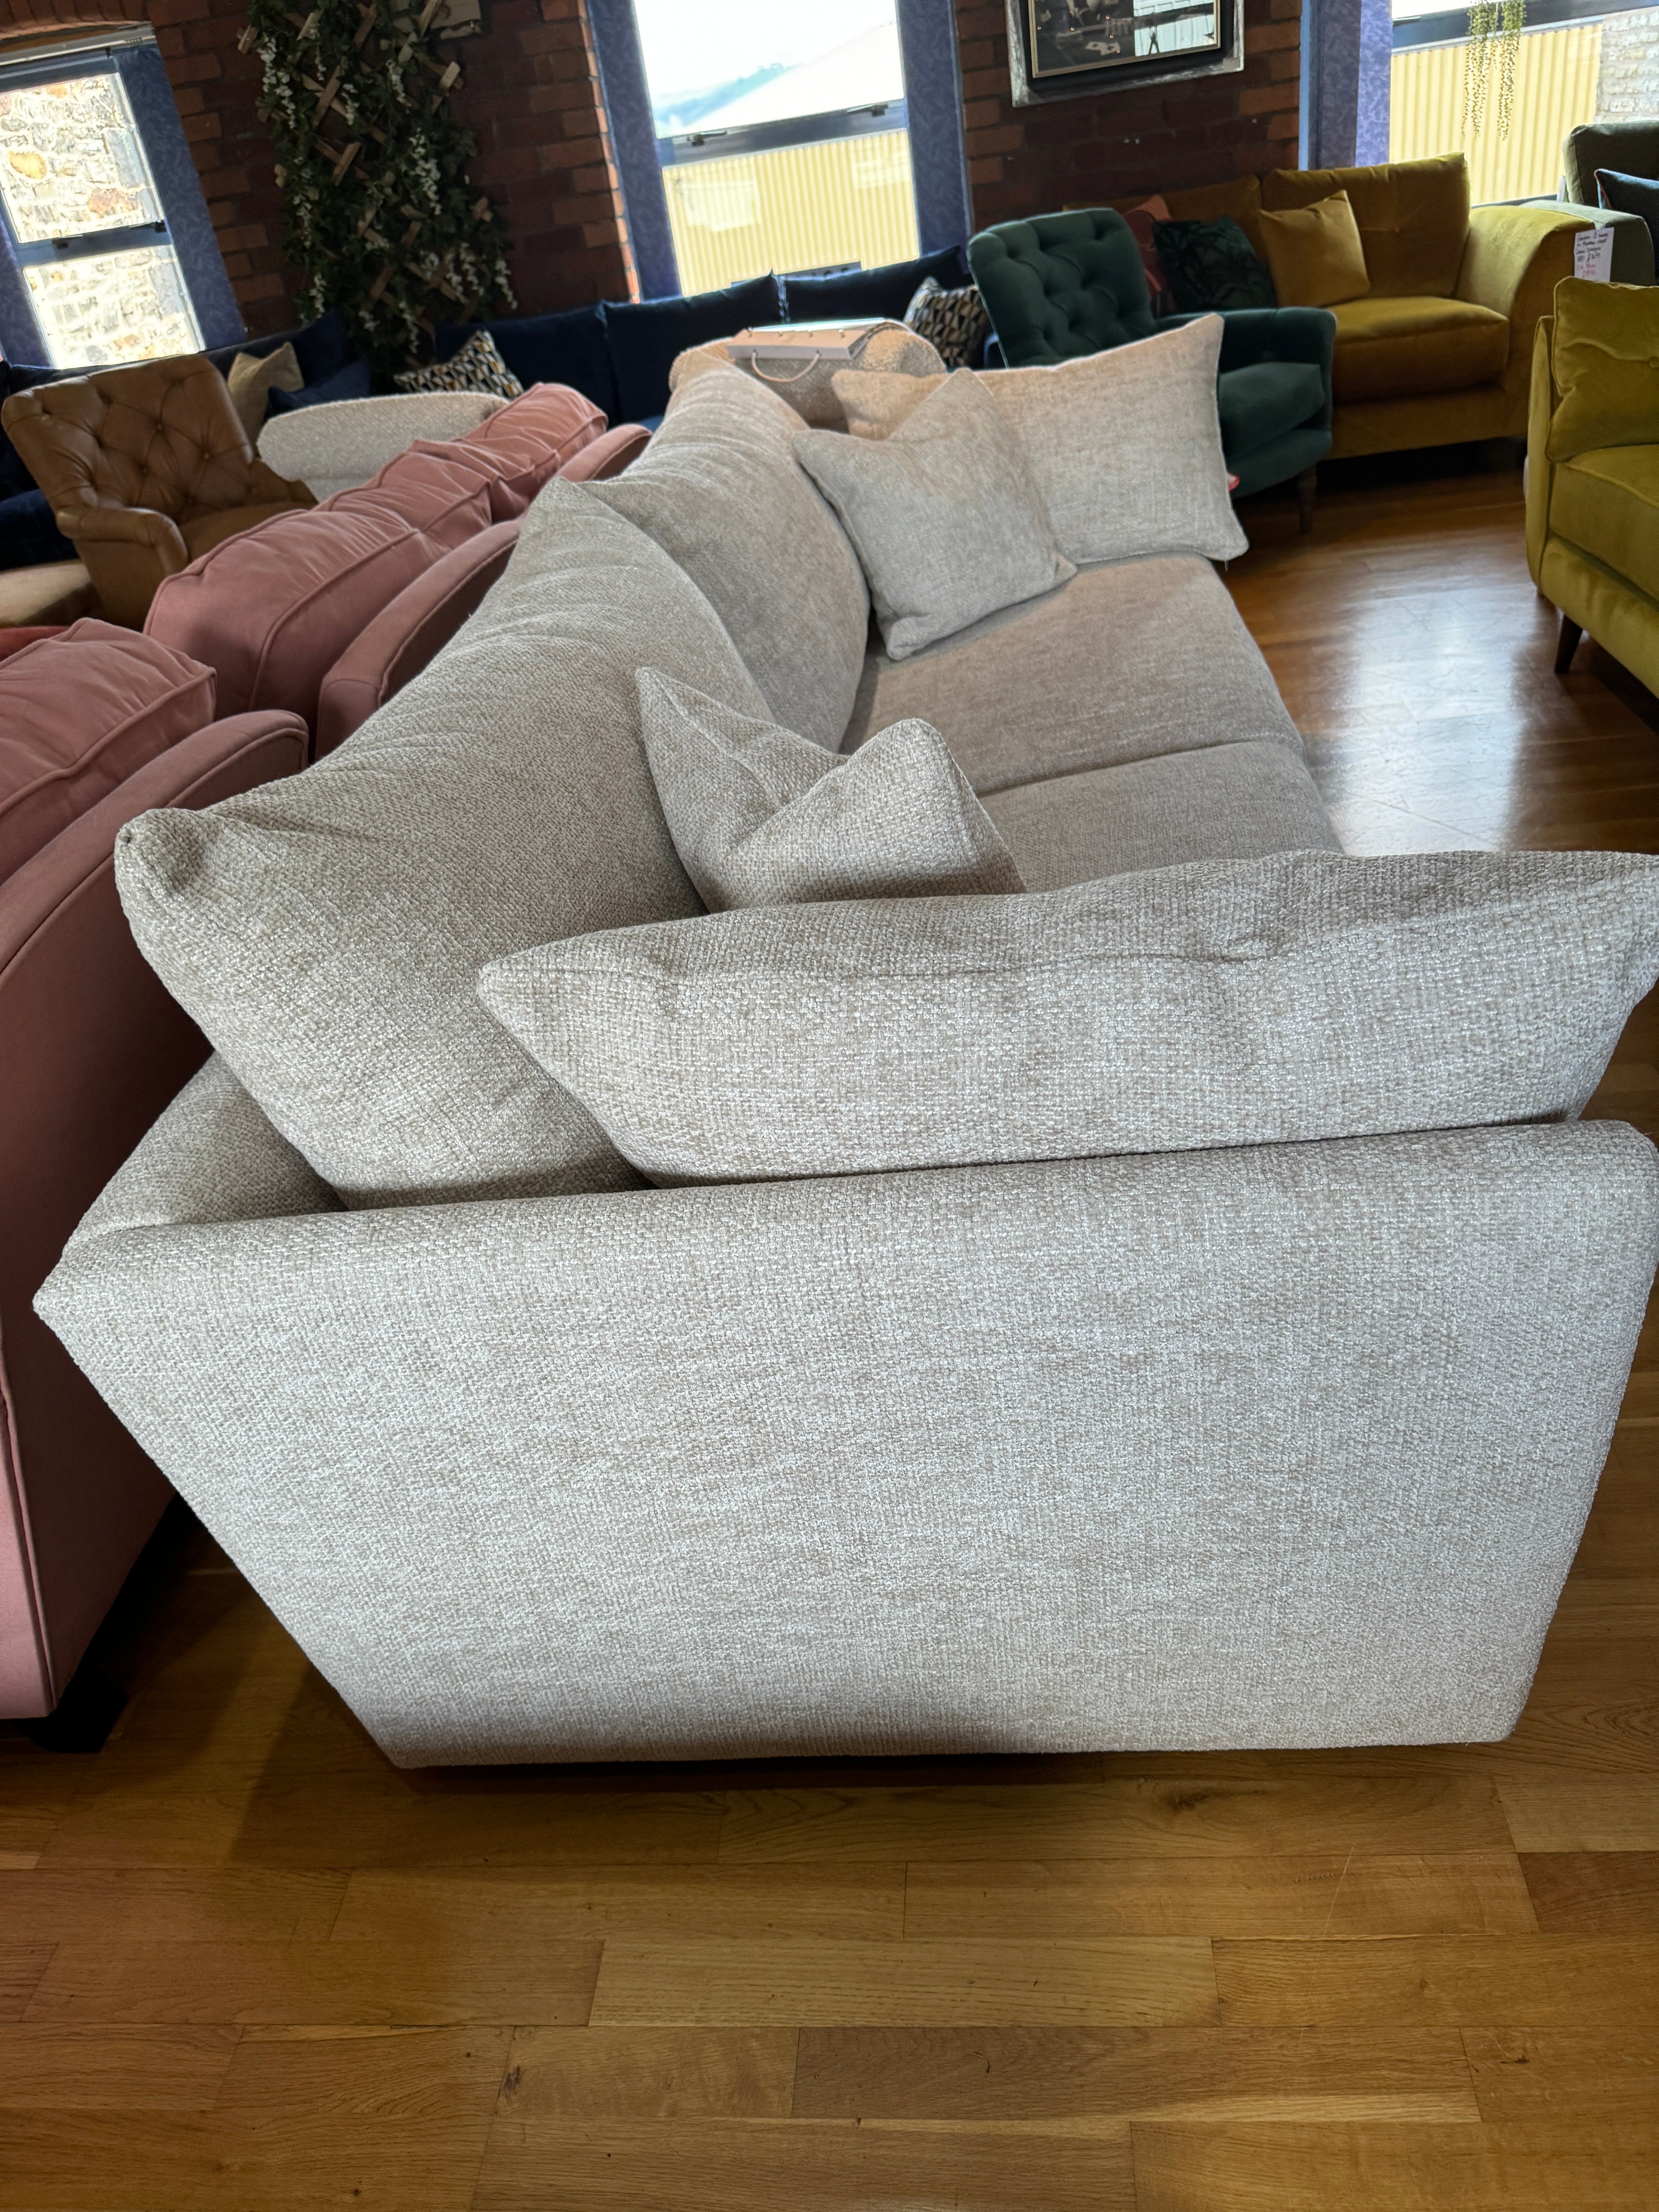 Tallulah split 4 seater sofa in light ivory chunky chenille weave fabric